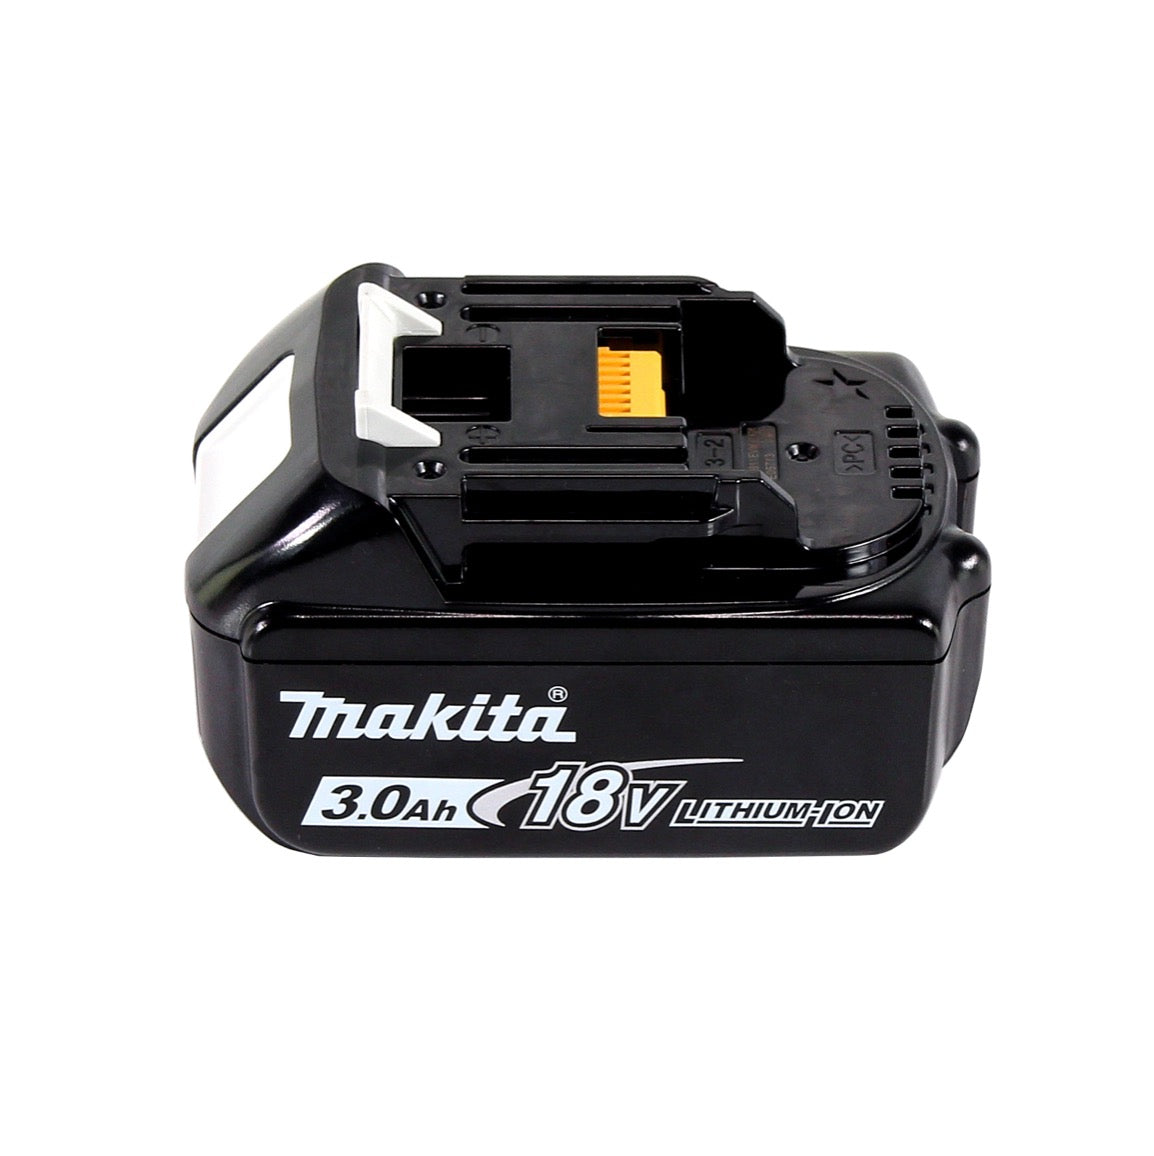 Makita DHP 458 F1 Akku Schlagbohrschrauber 18 V 91 Nm + 1x Akku 3,0 Ah - ohne Ladegerät